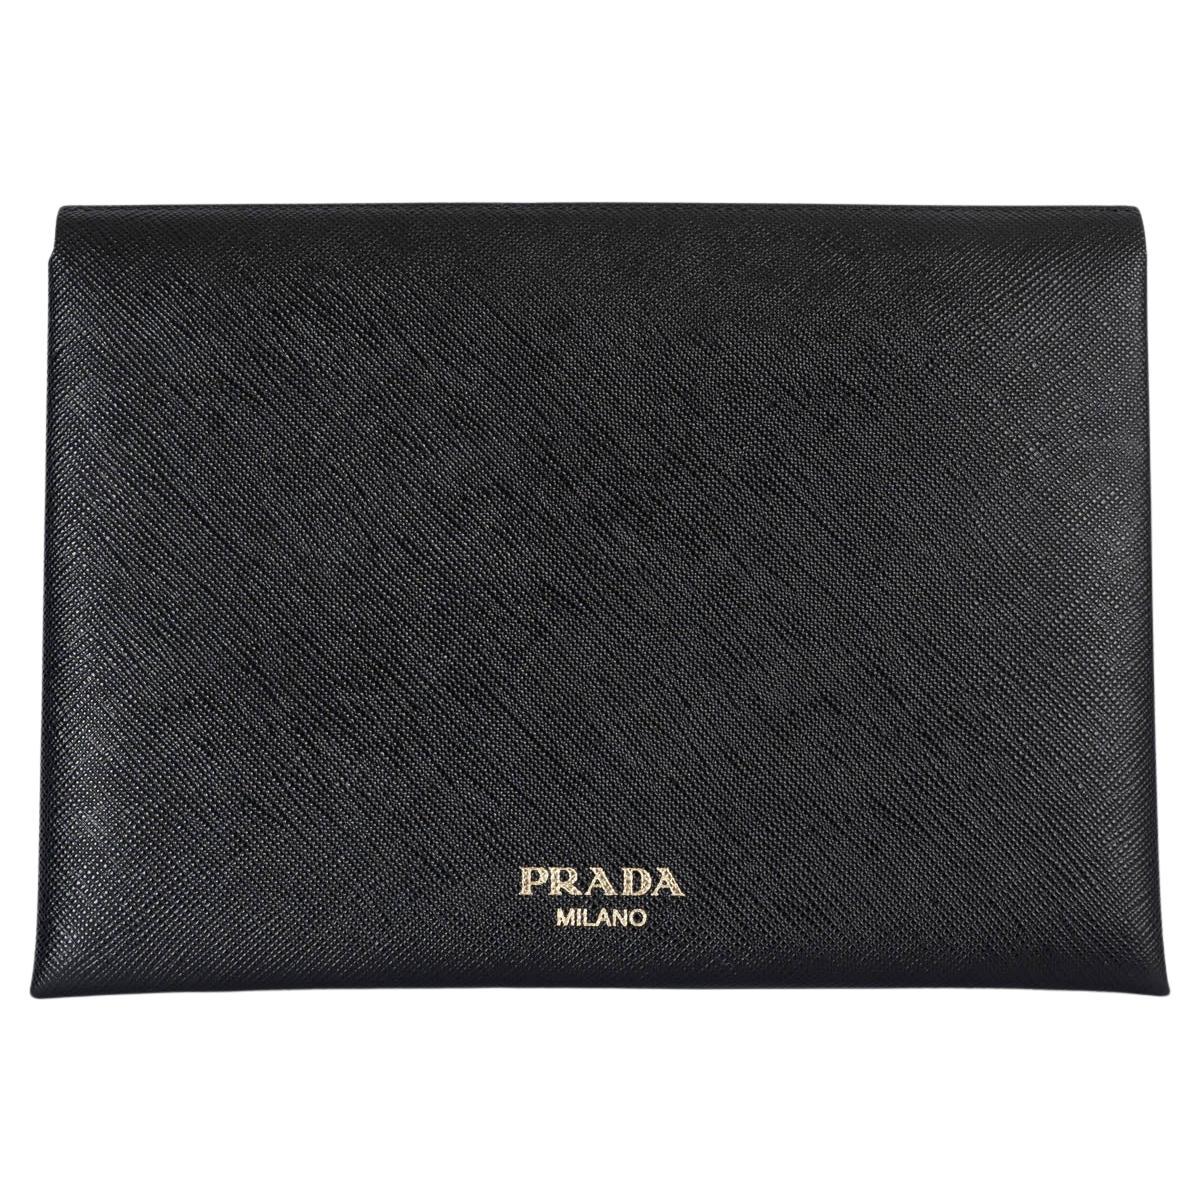 PRADA black / red Saffiano leather SMALL DOCUMENT PORTFOLIO Pouch Bag For Sale